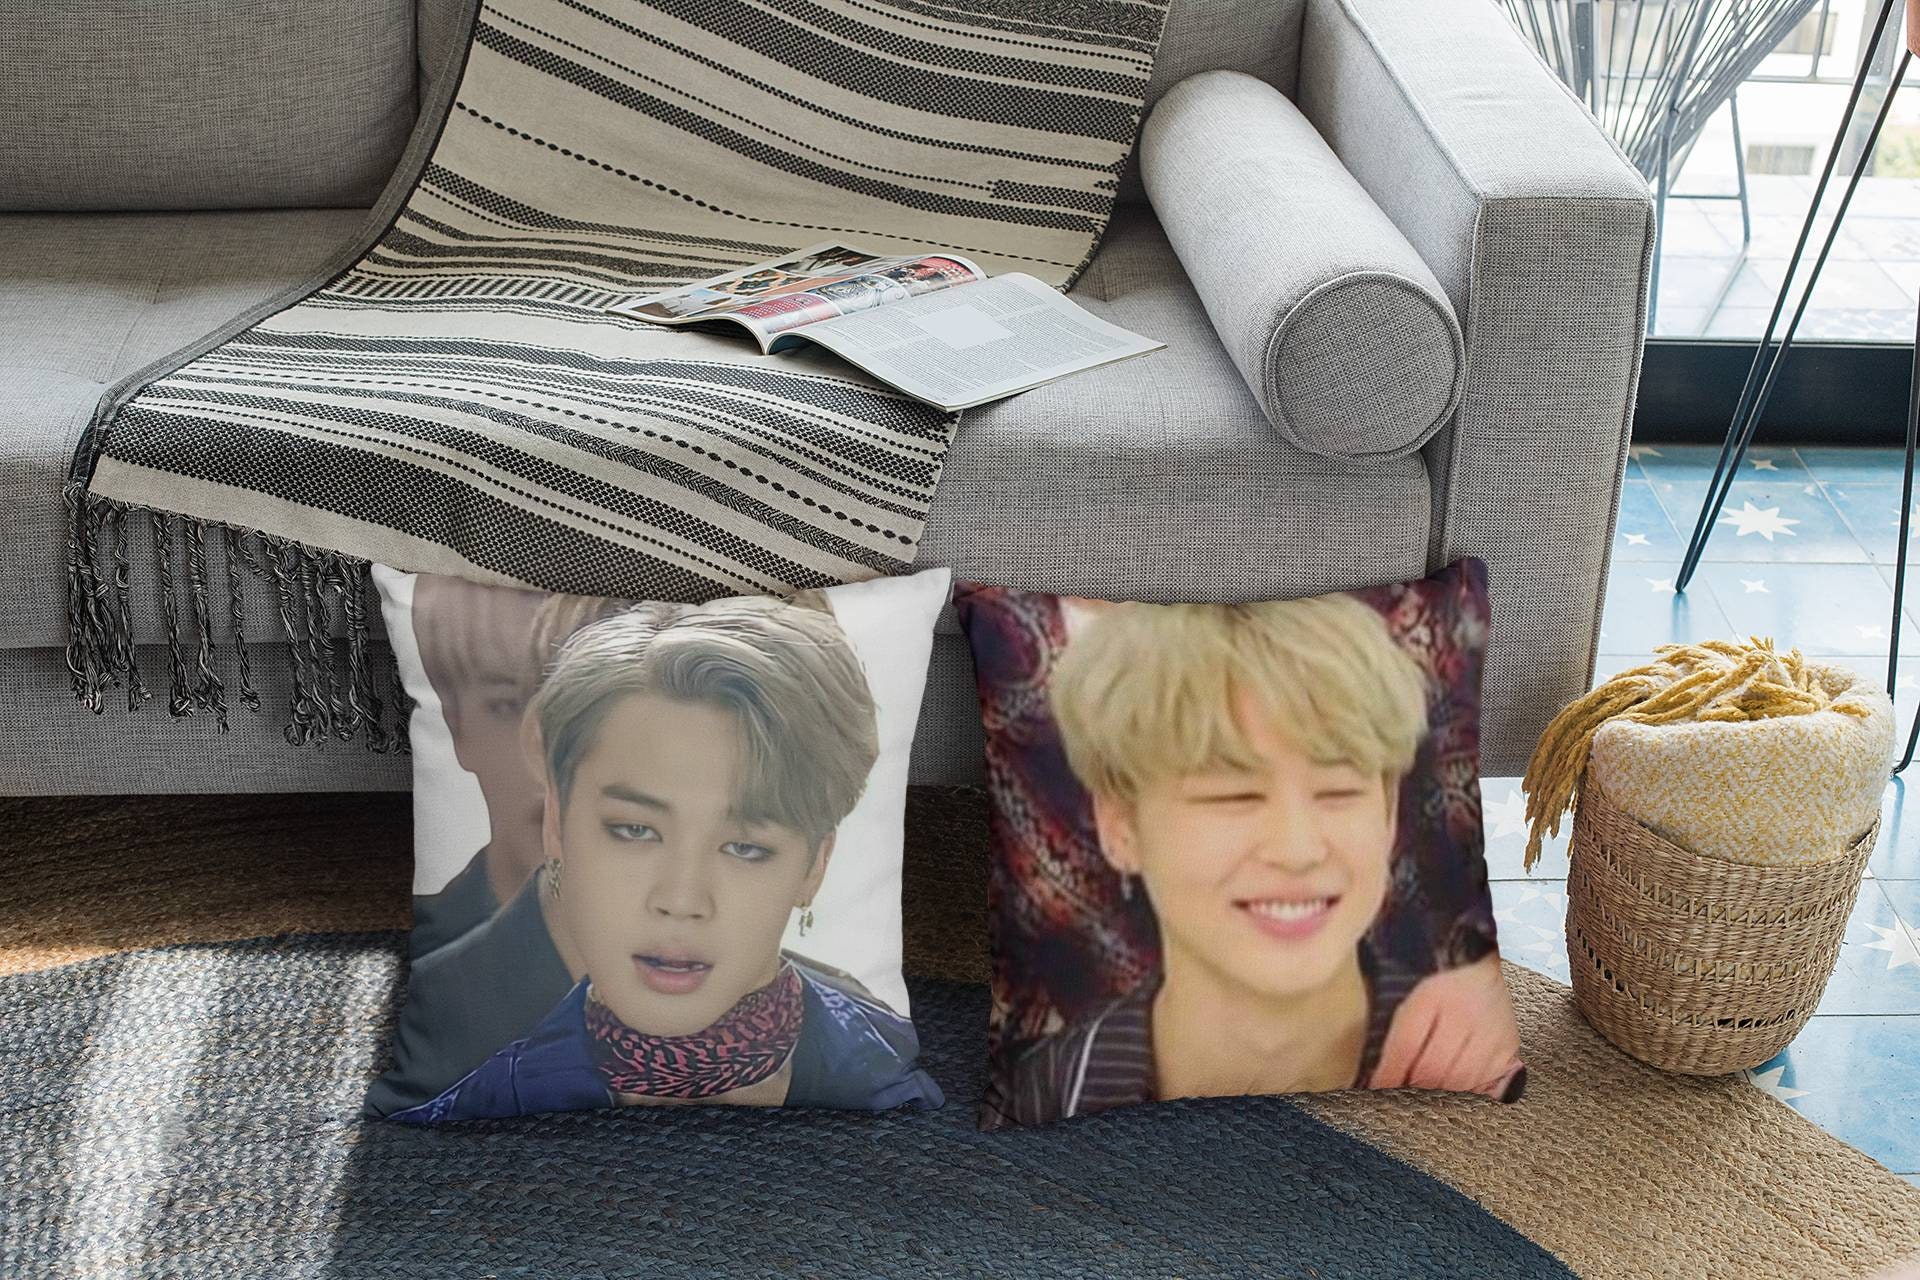 BTS Personalize Name RM Jin Suga JHope Jimin V Jungkook Pillowcase Cushion  Cover